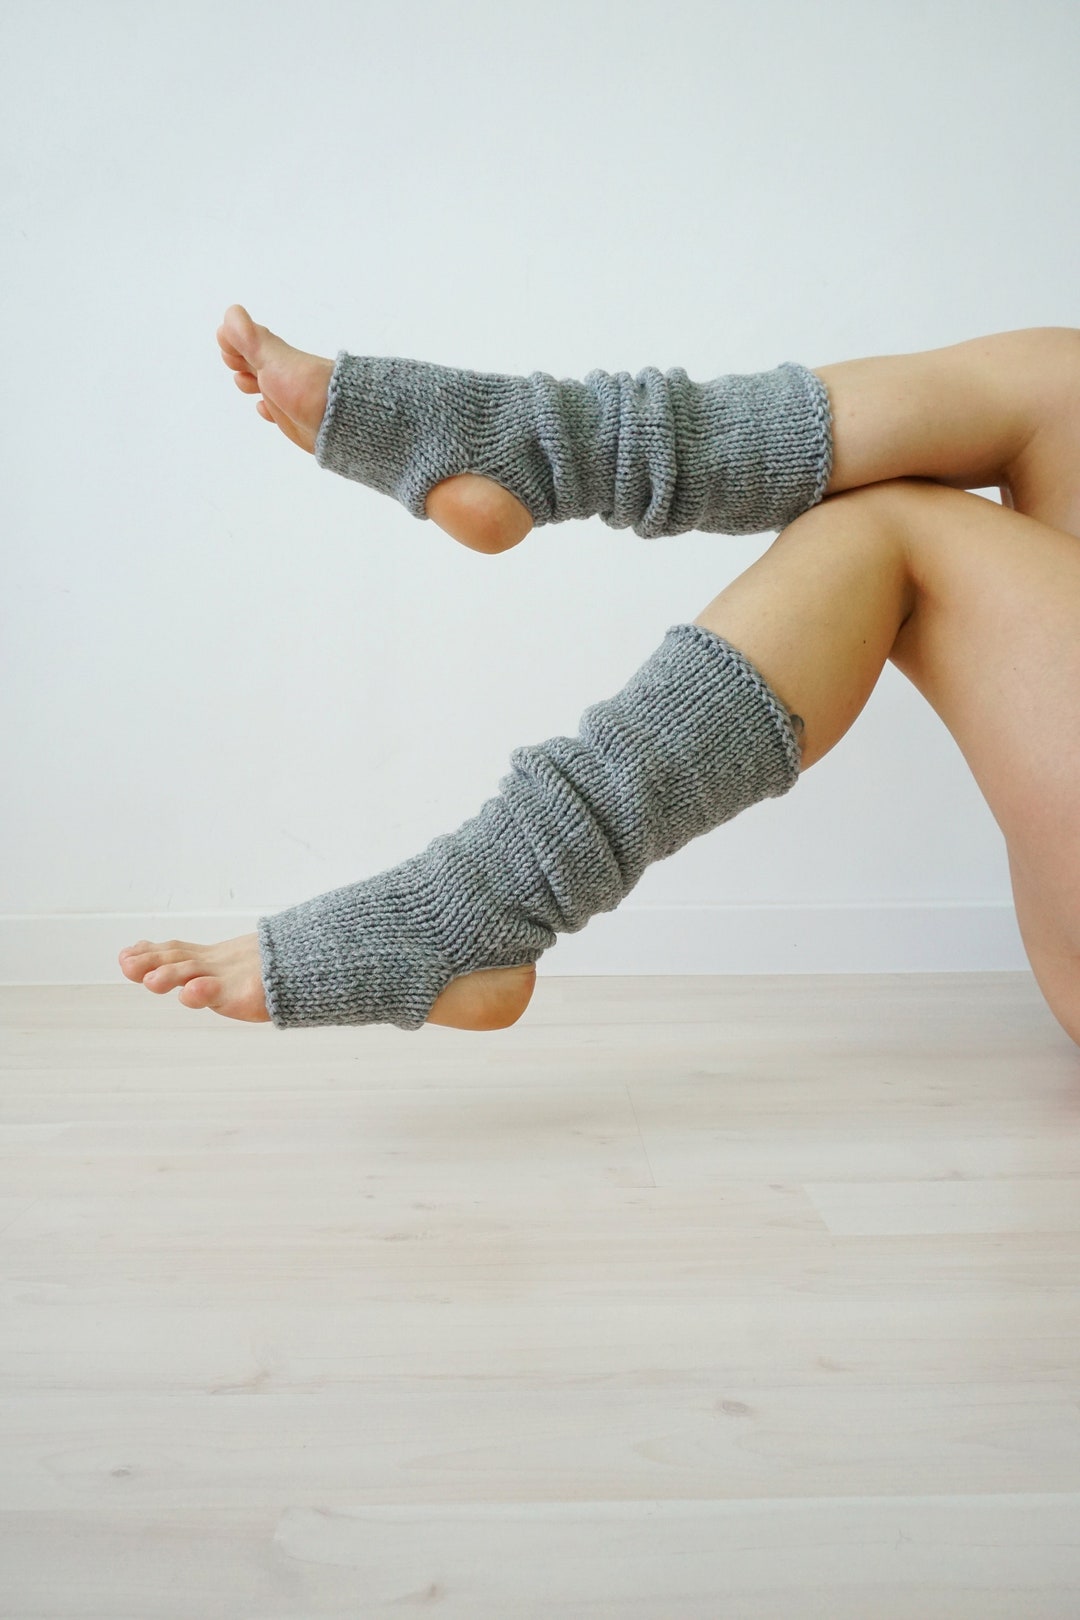 Gray Leg Warmers, Yoga Socks, Yoga Accessories, Pilates Socks